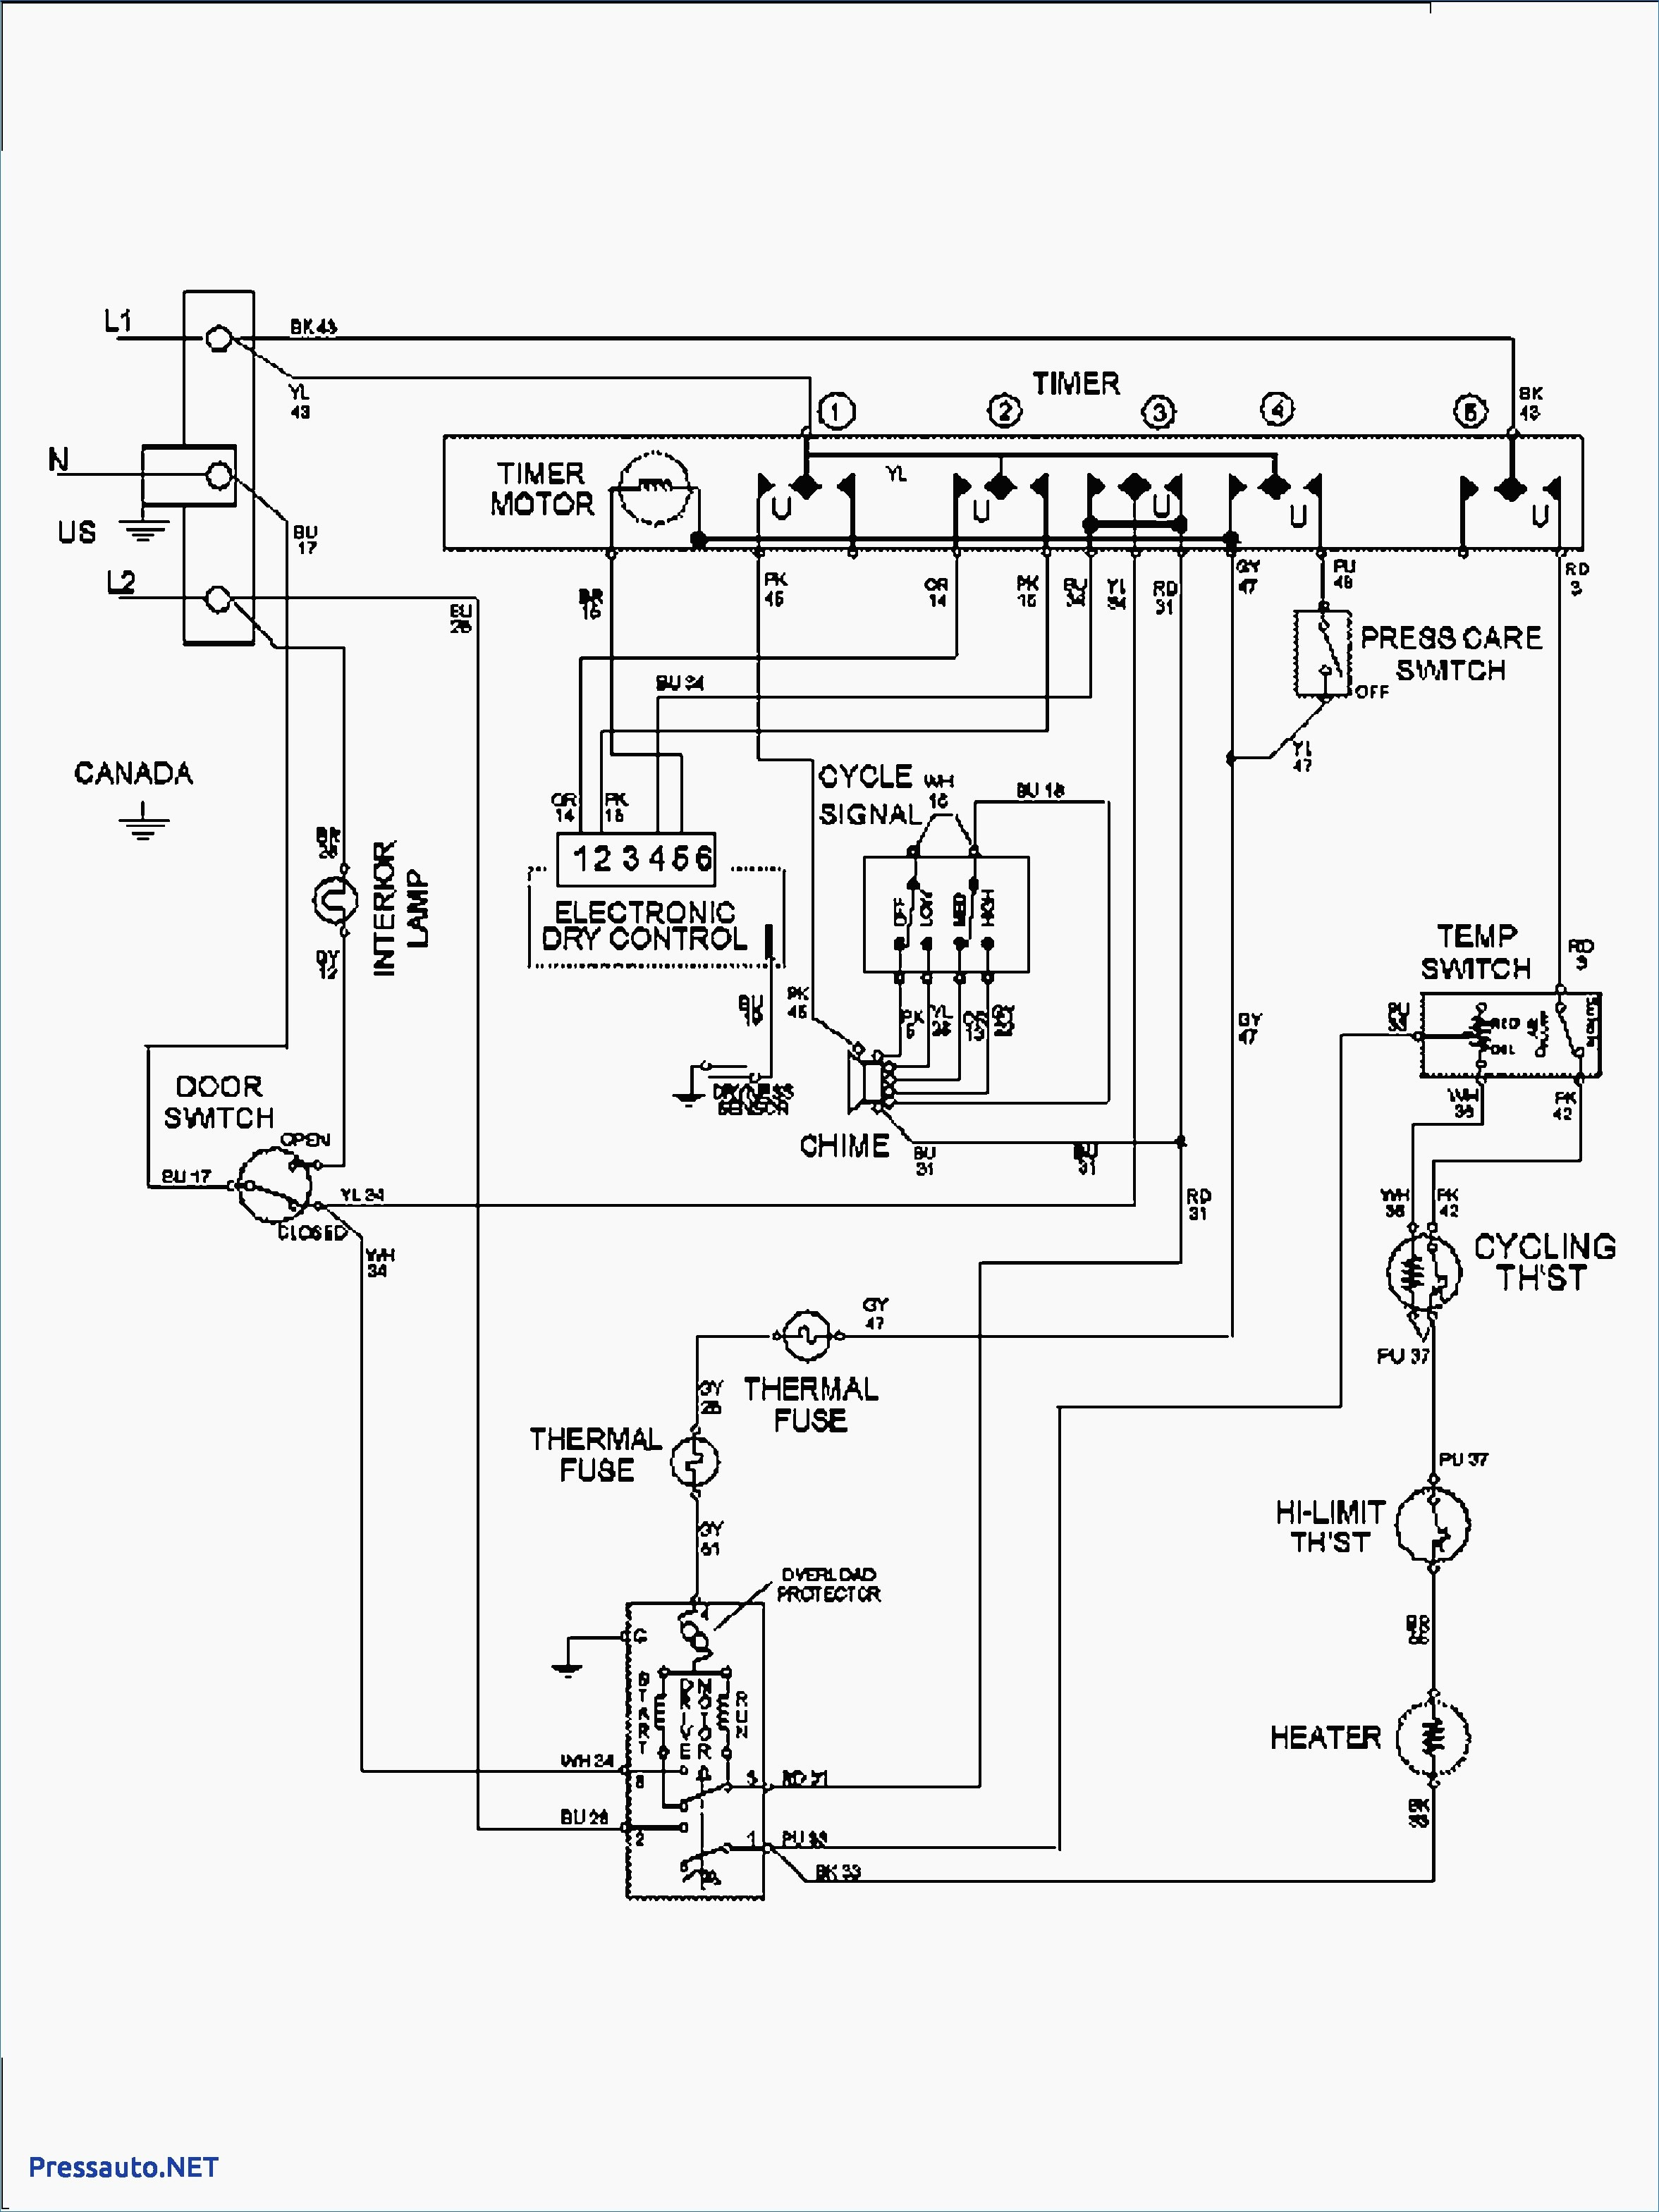 Wiring Diagram: 30 Roper Dryer Wiring Diagram